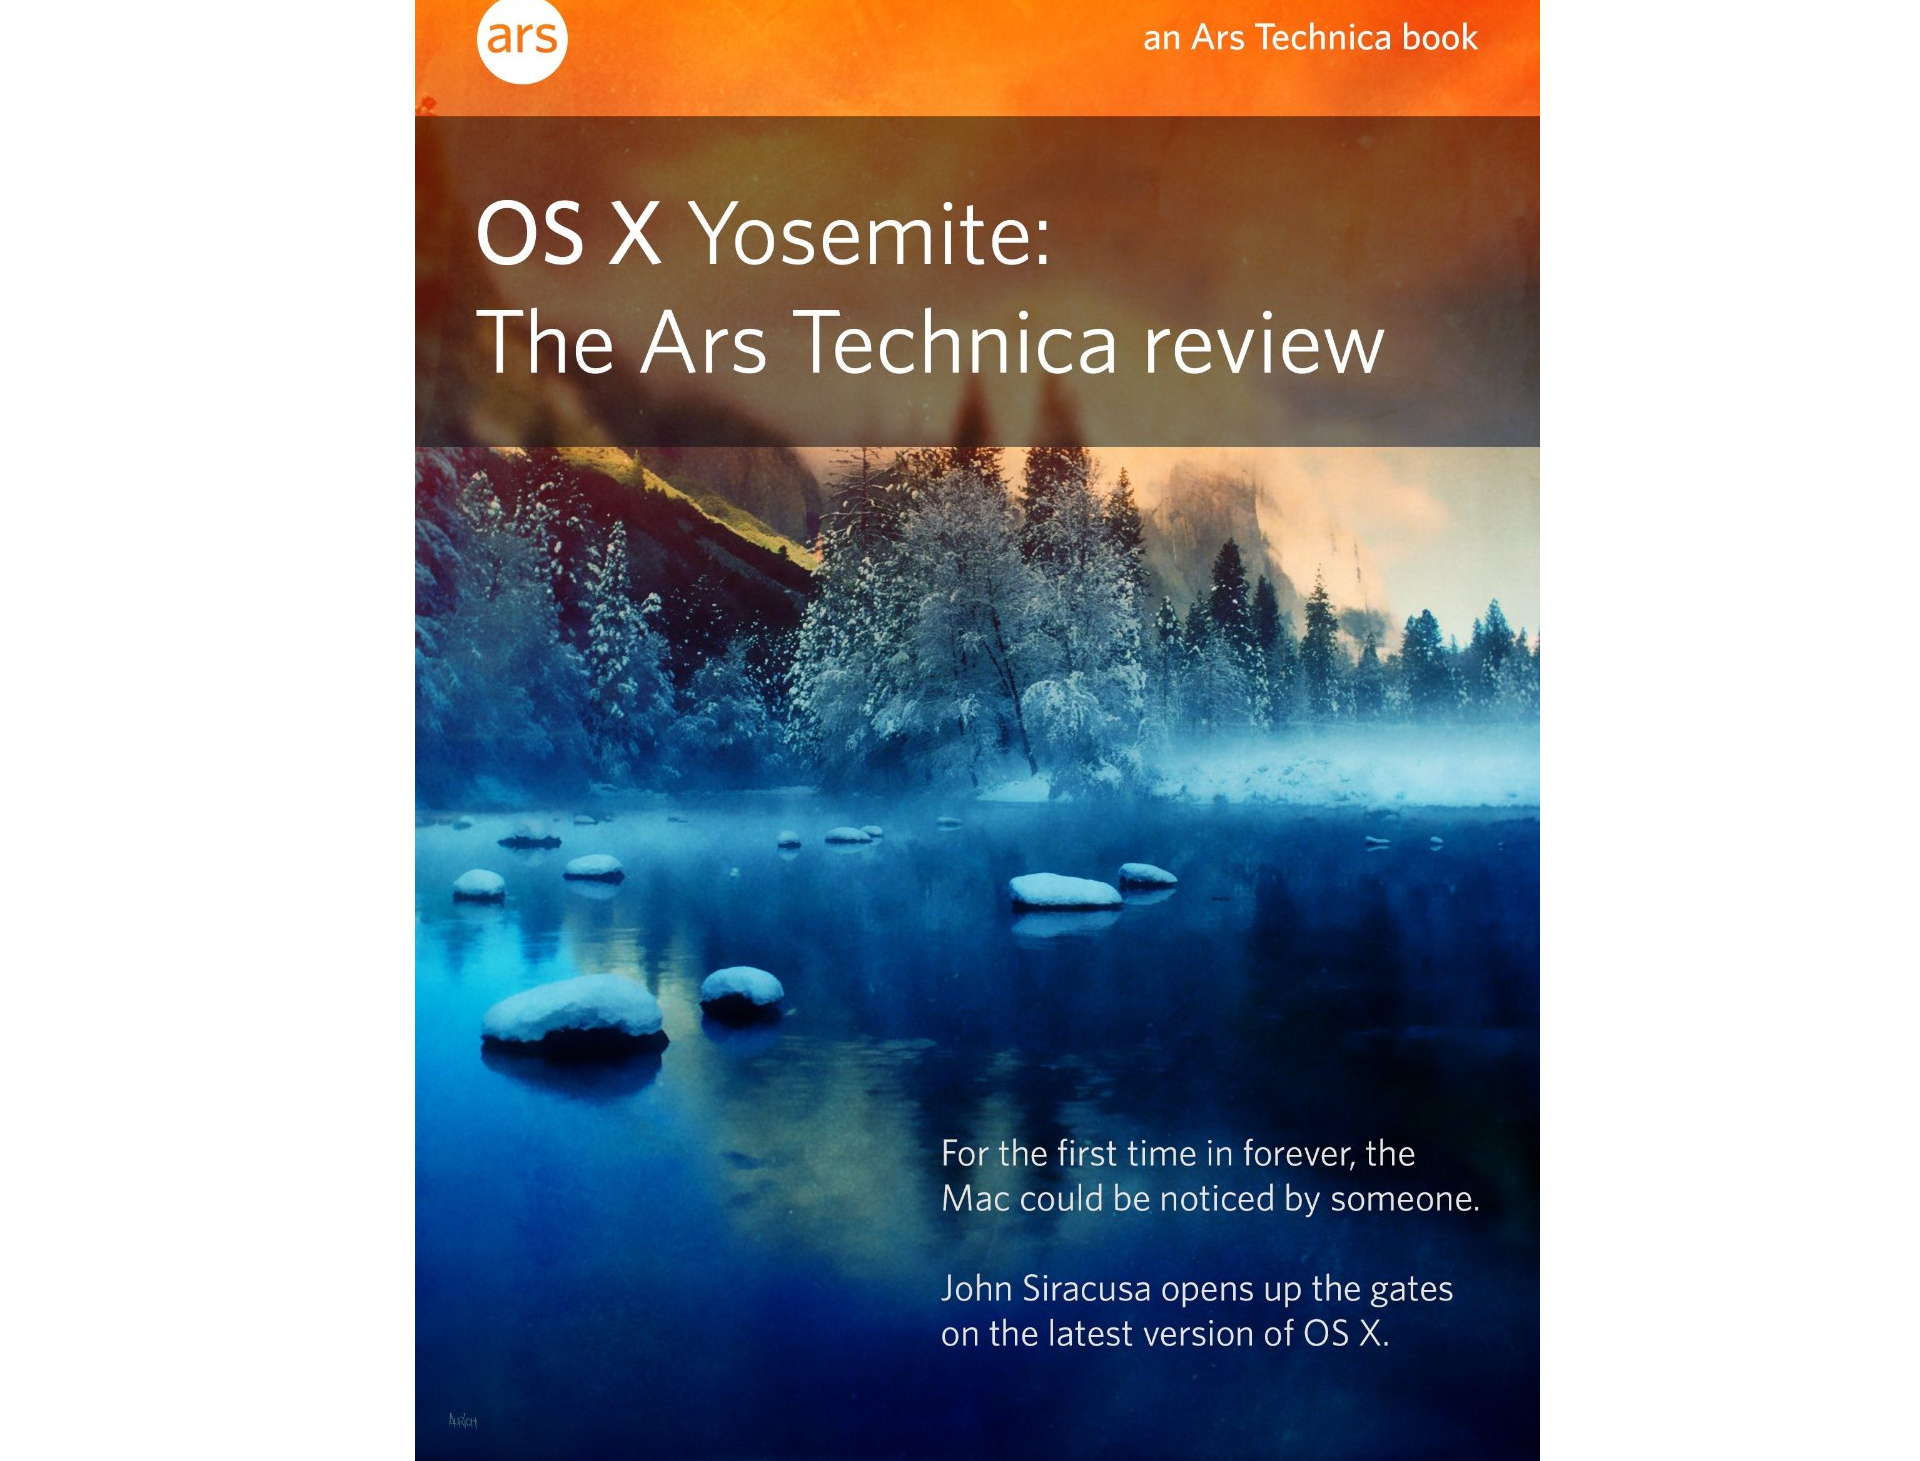 OS X Yosemite review